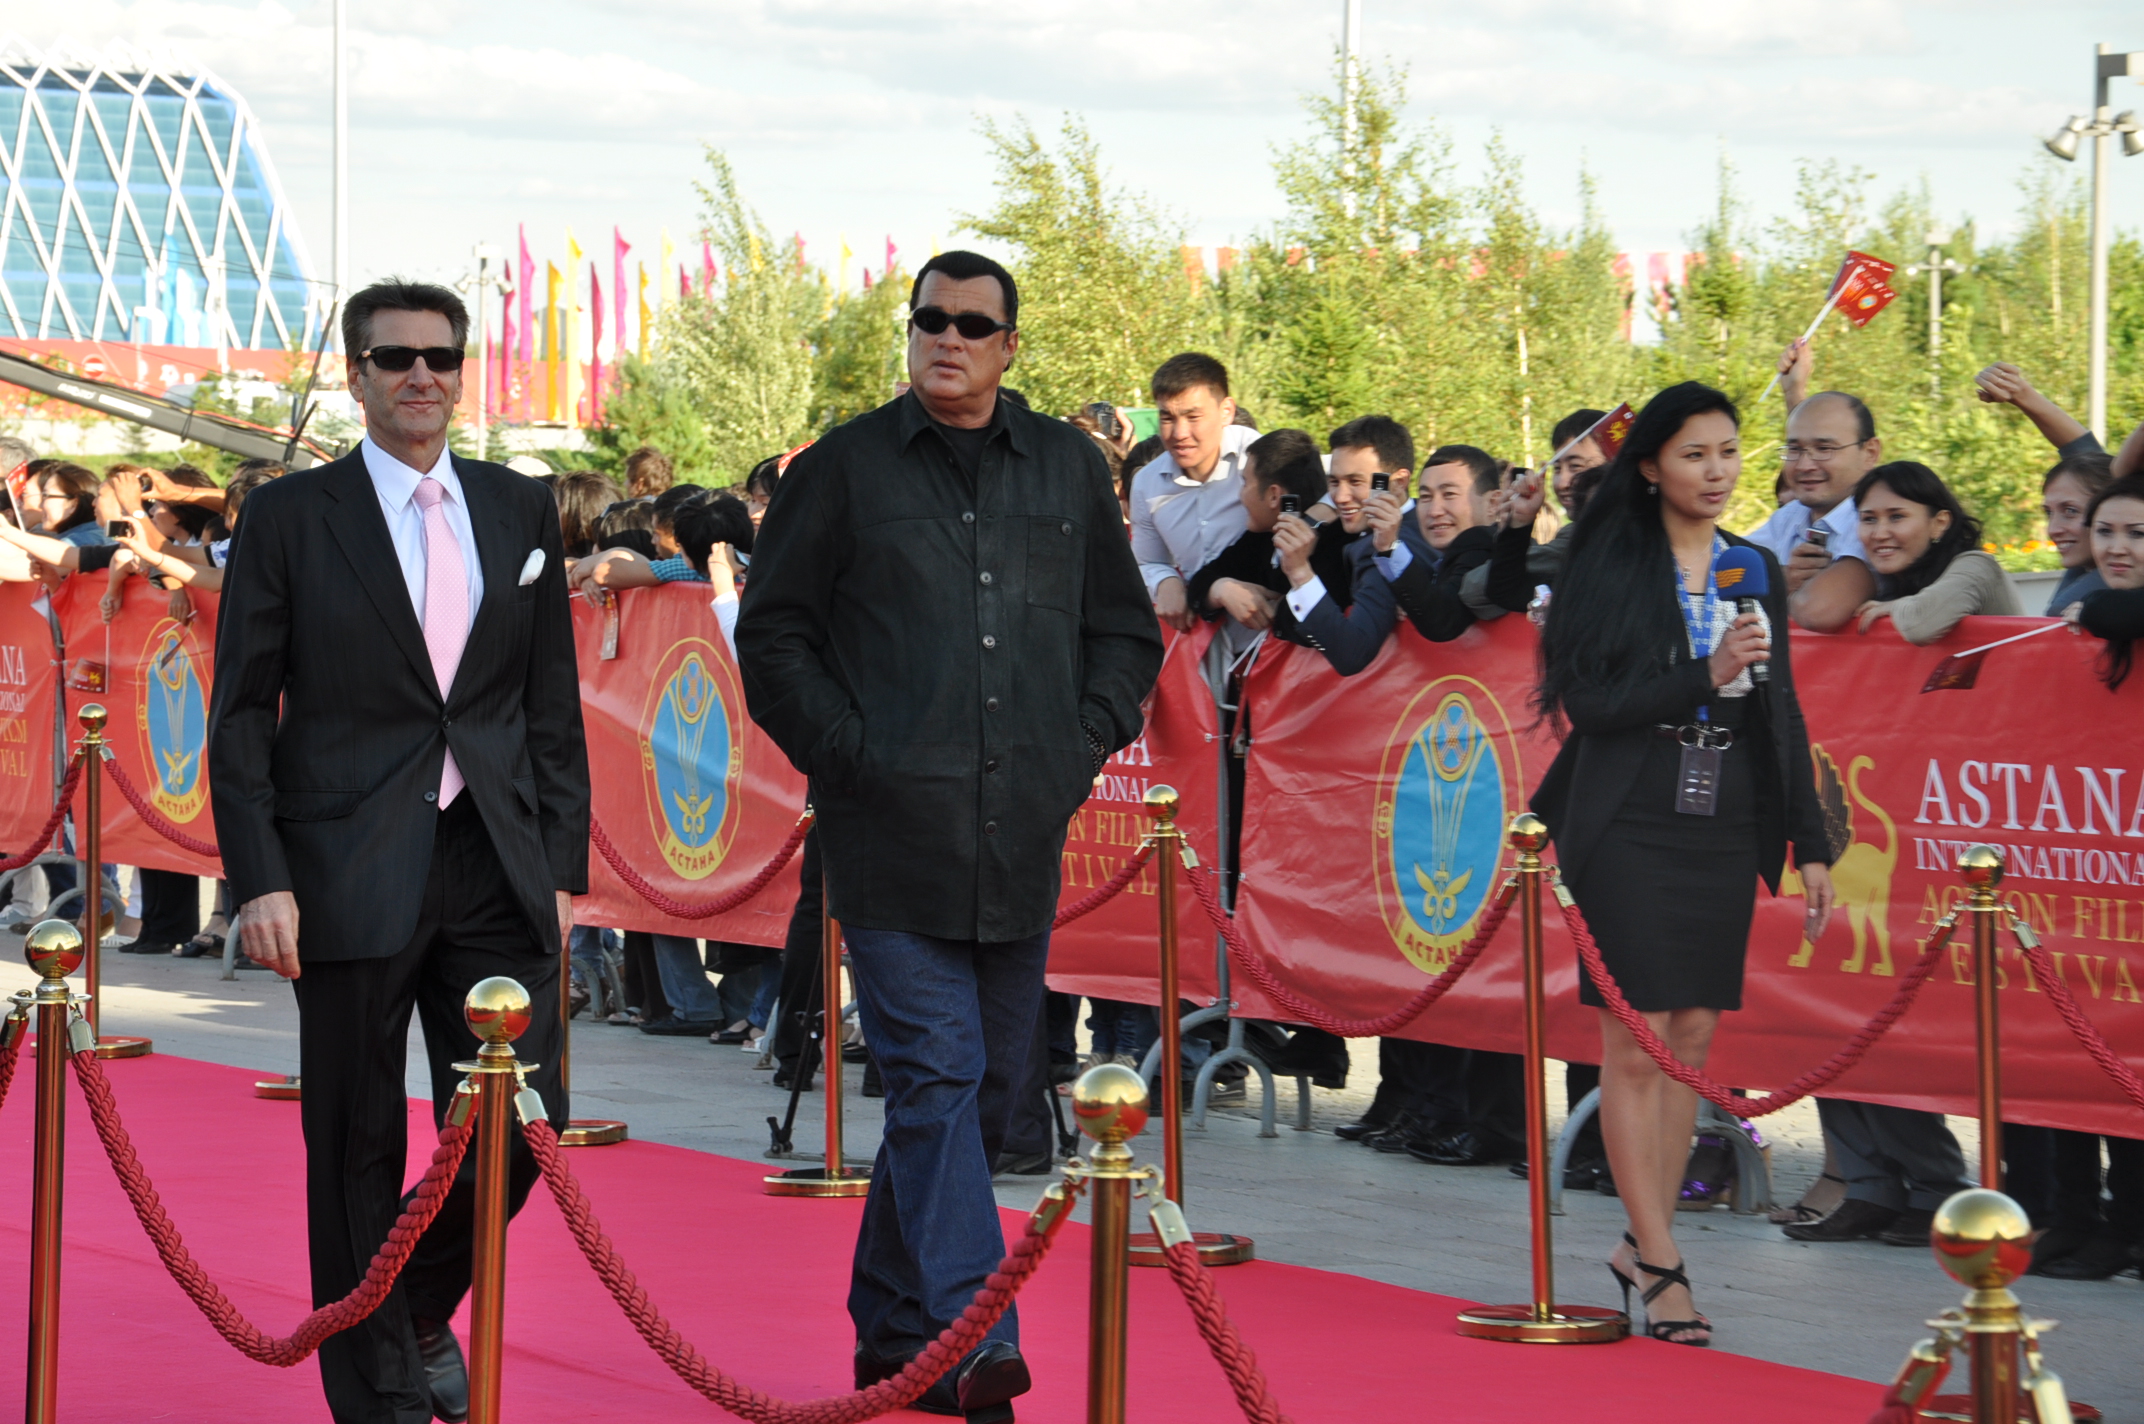 Bob Van Ronkel and Steven Seagal in Astana, Kazakhstan.